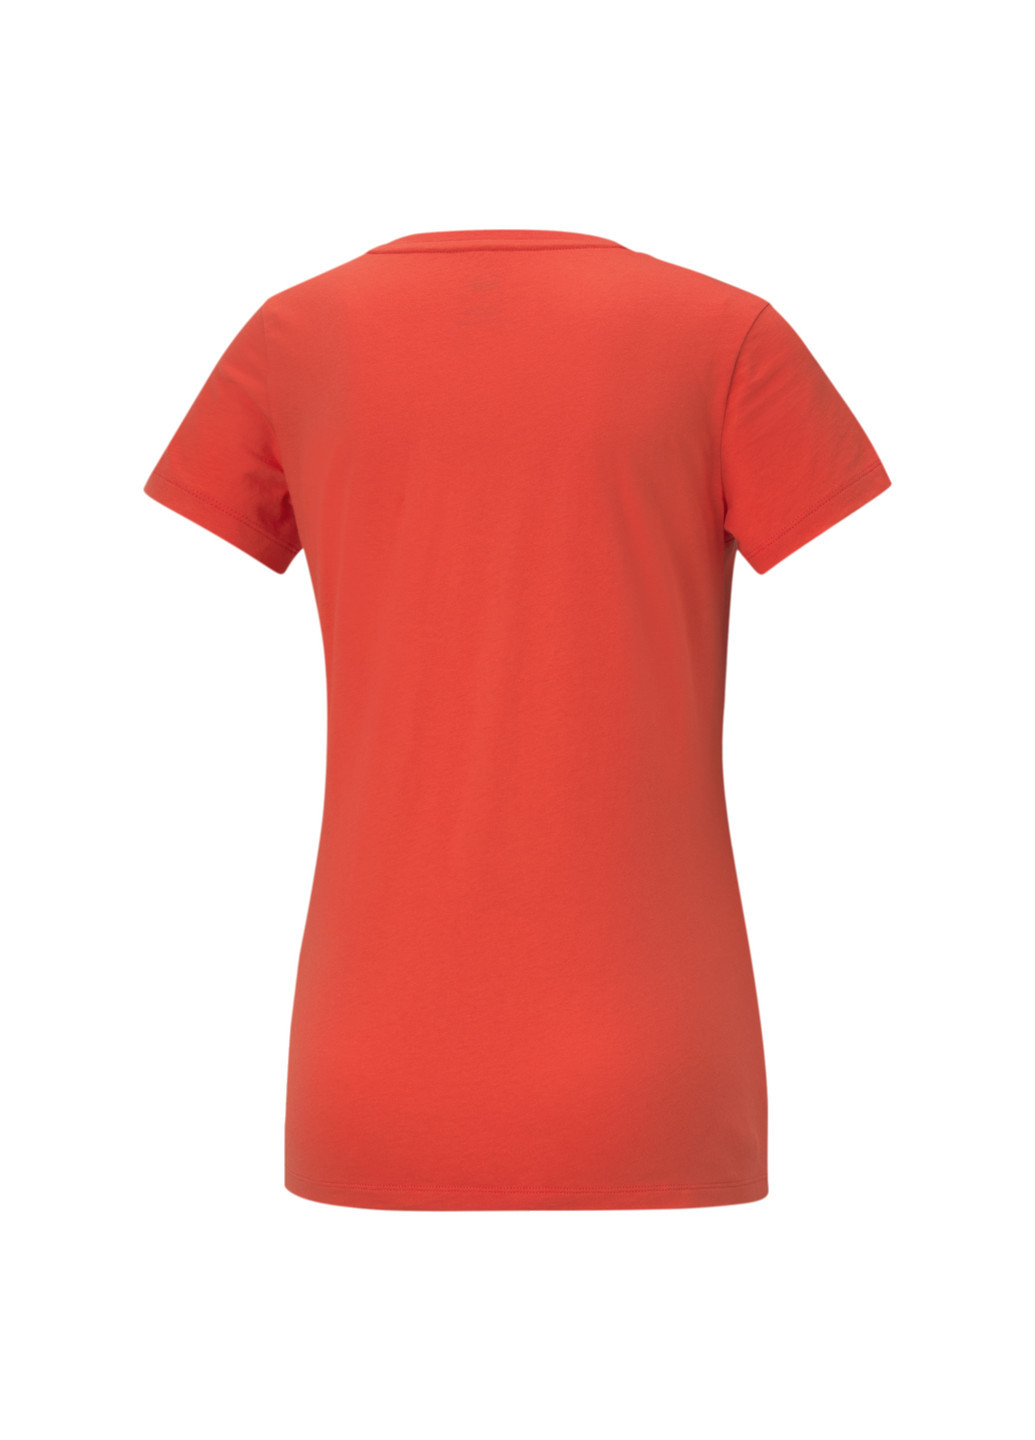 Червона всесезон футболка rebel graphic women's tee Puma